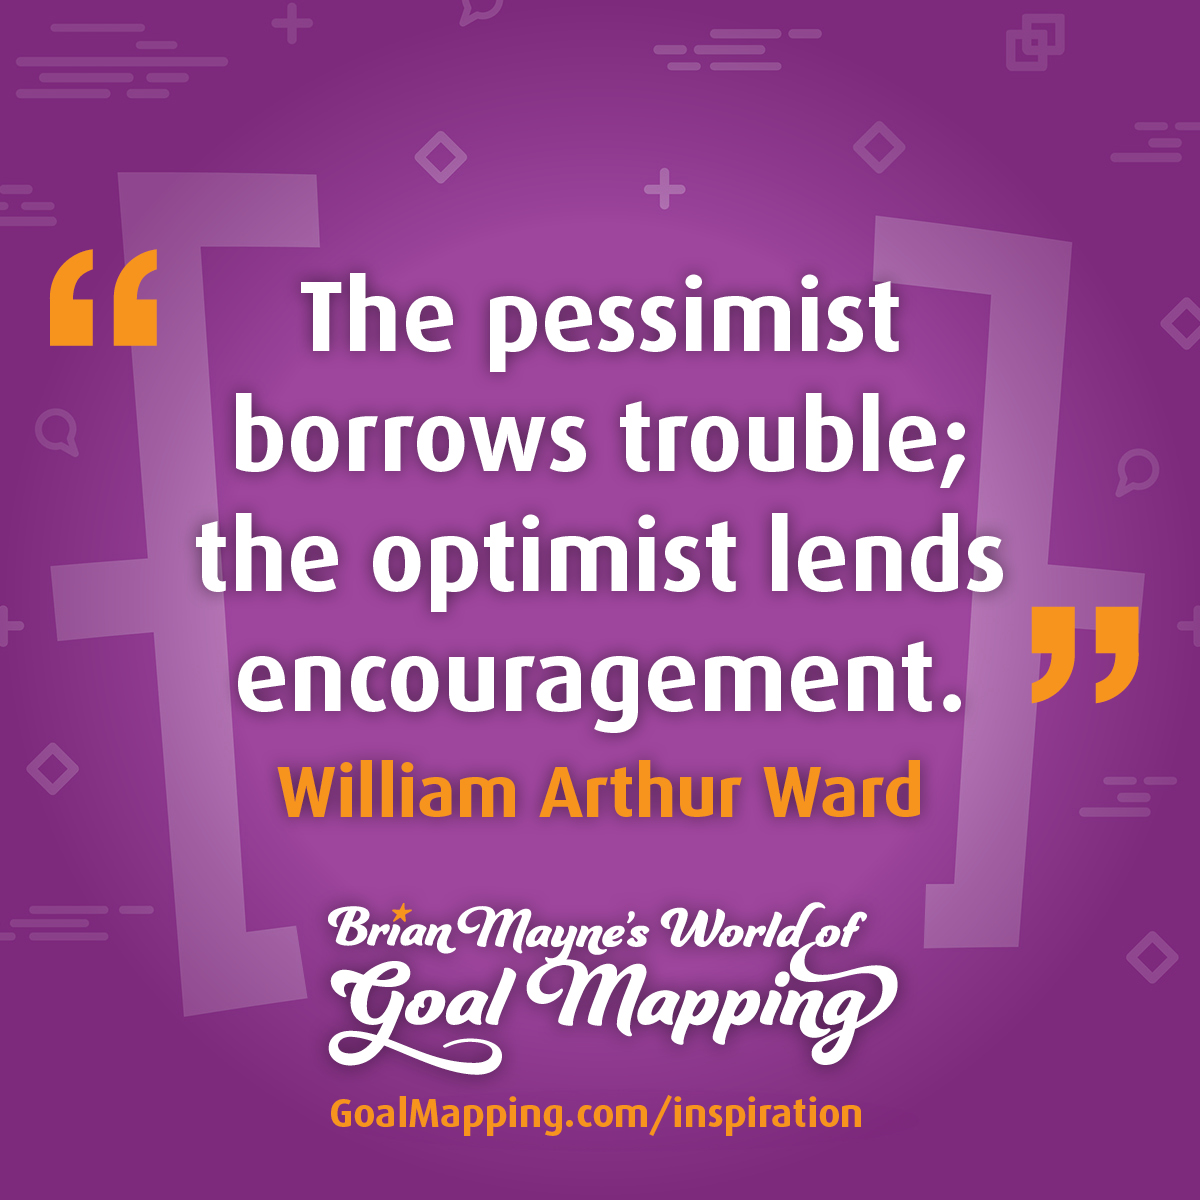 "The pessimist borrows trouble; the optimist lends encouragement." William Arthur Ward